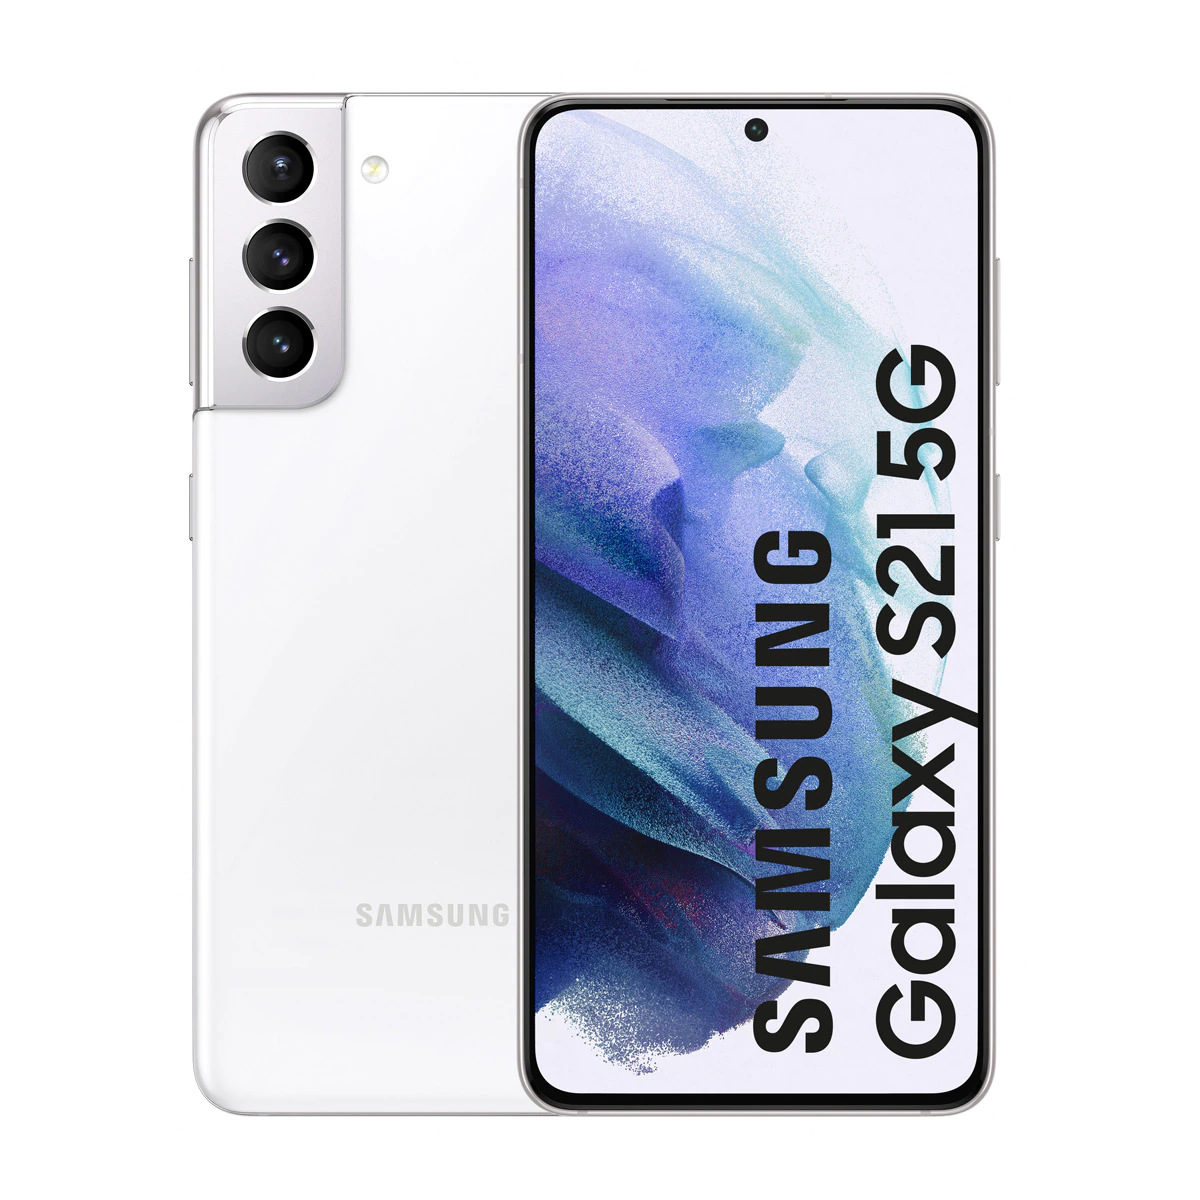 Samsung Galaxy S21 5G 8 GB + 128 GB blanco móvil libre